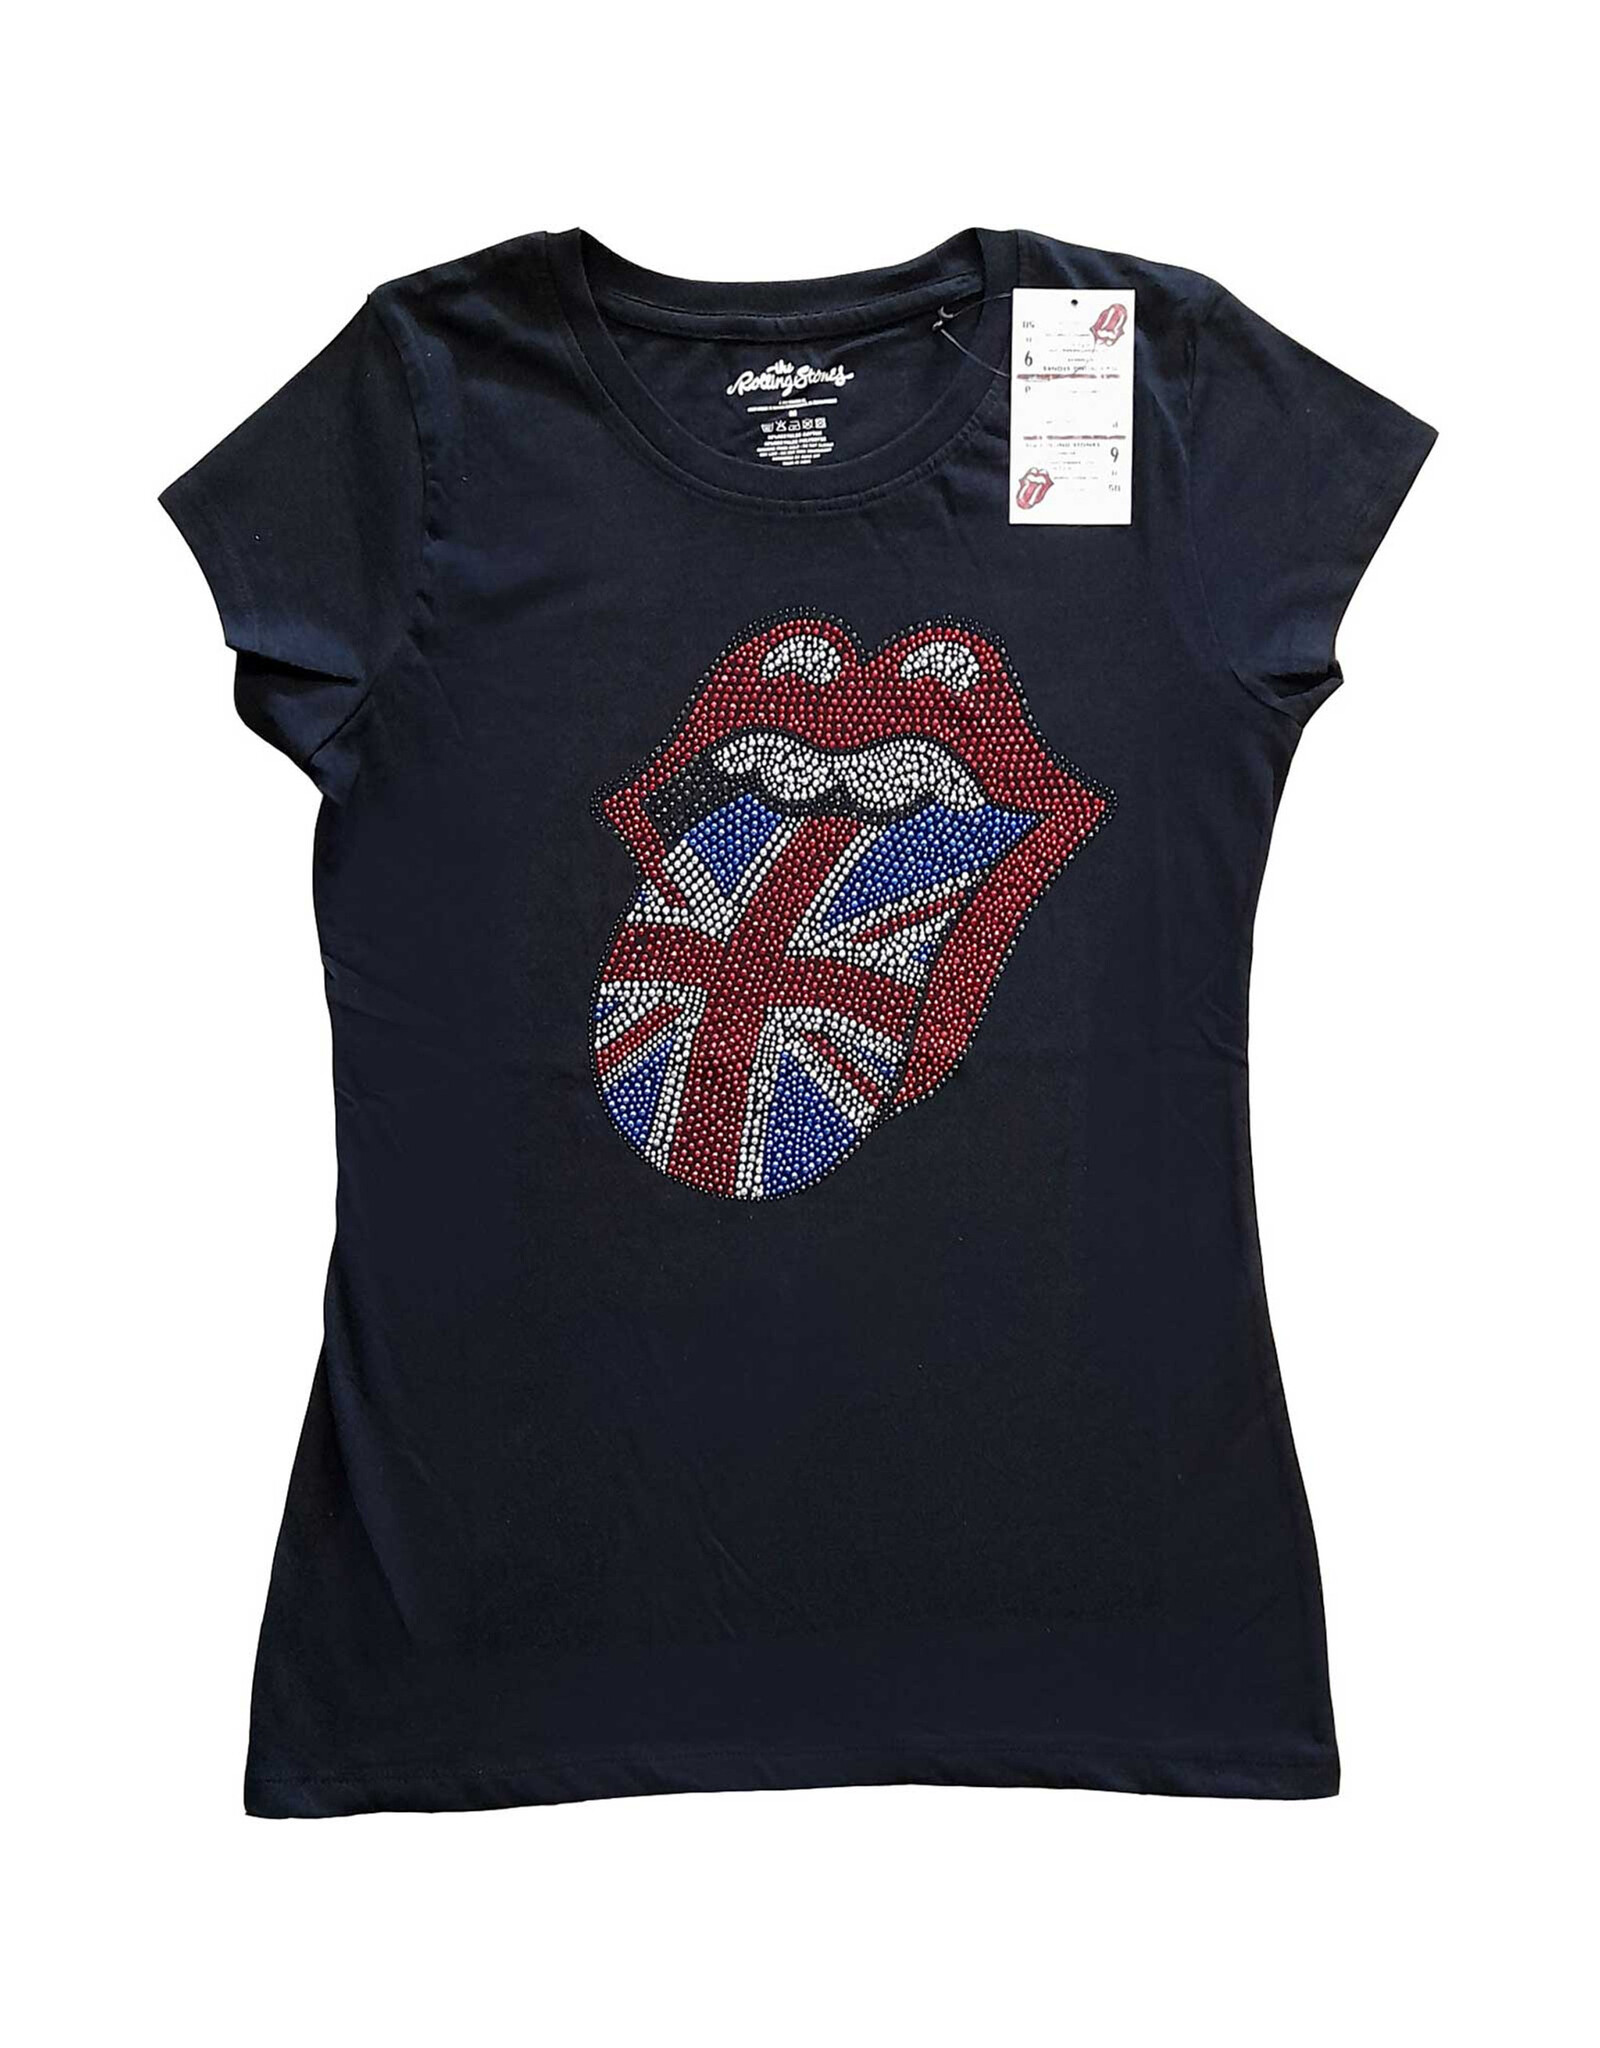 The Rolling Stones - Classic Tongue Women's Rhinestone T-Shirt - Pop Music